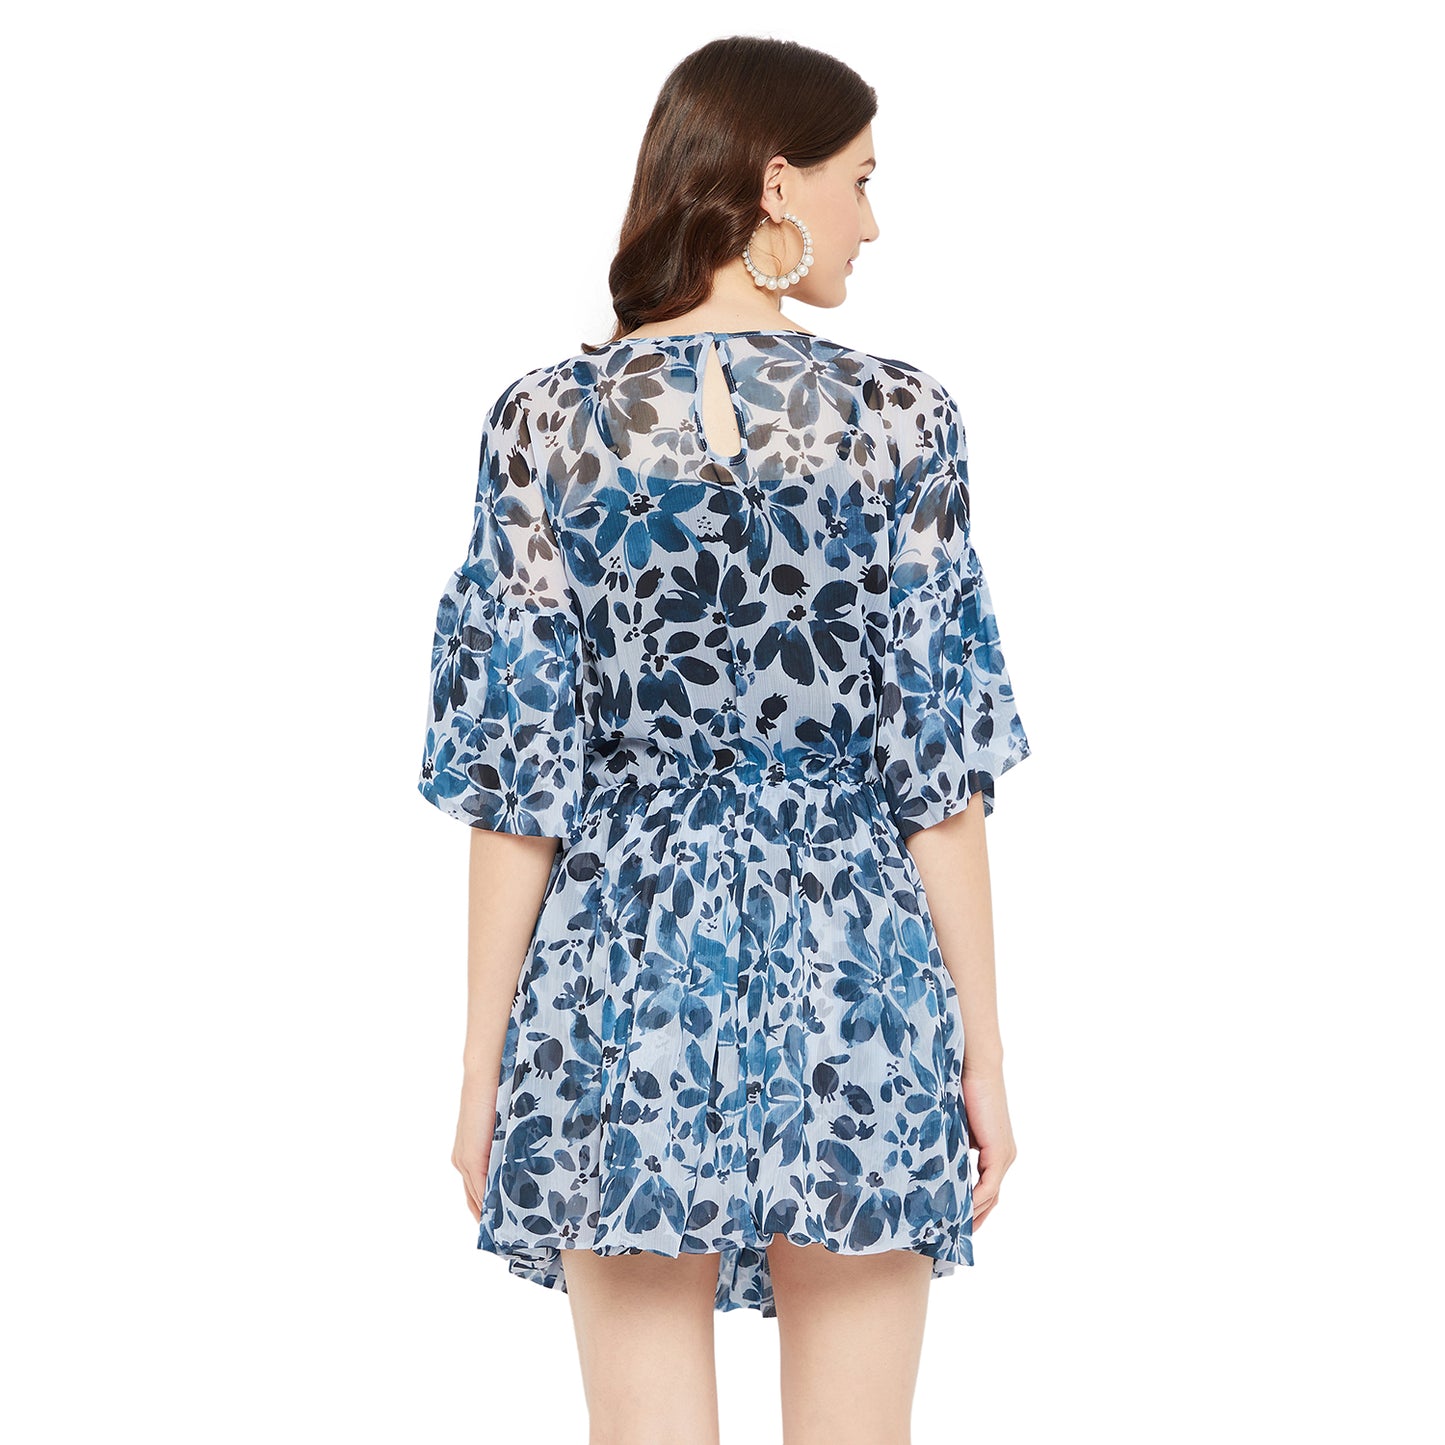 LY2 Sheer Floral Blue Printed Dress